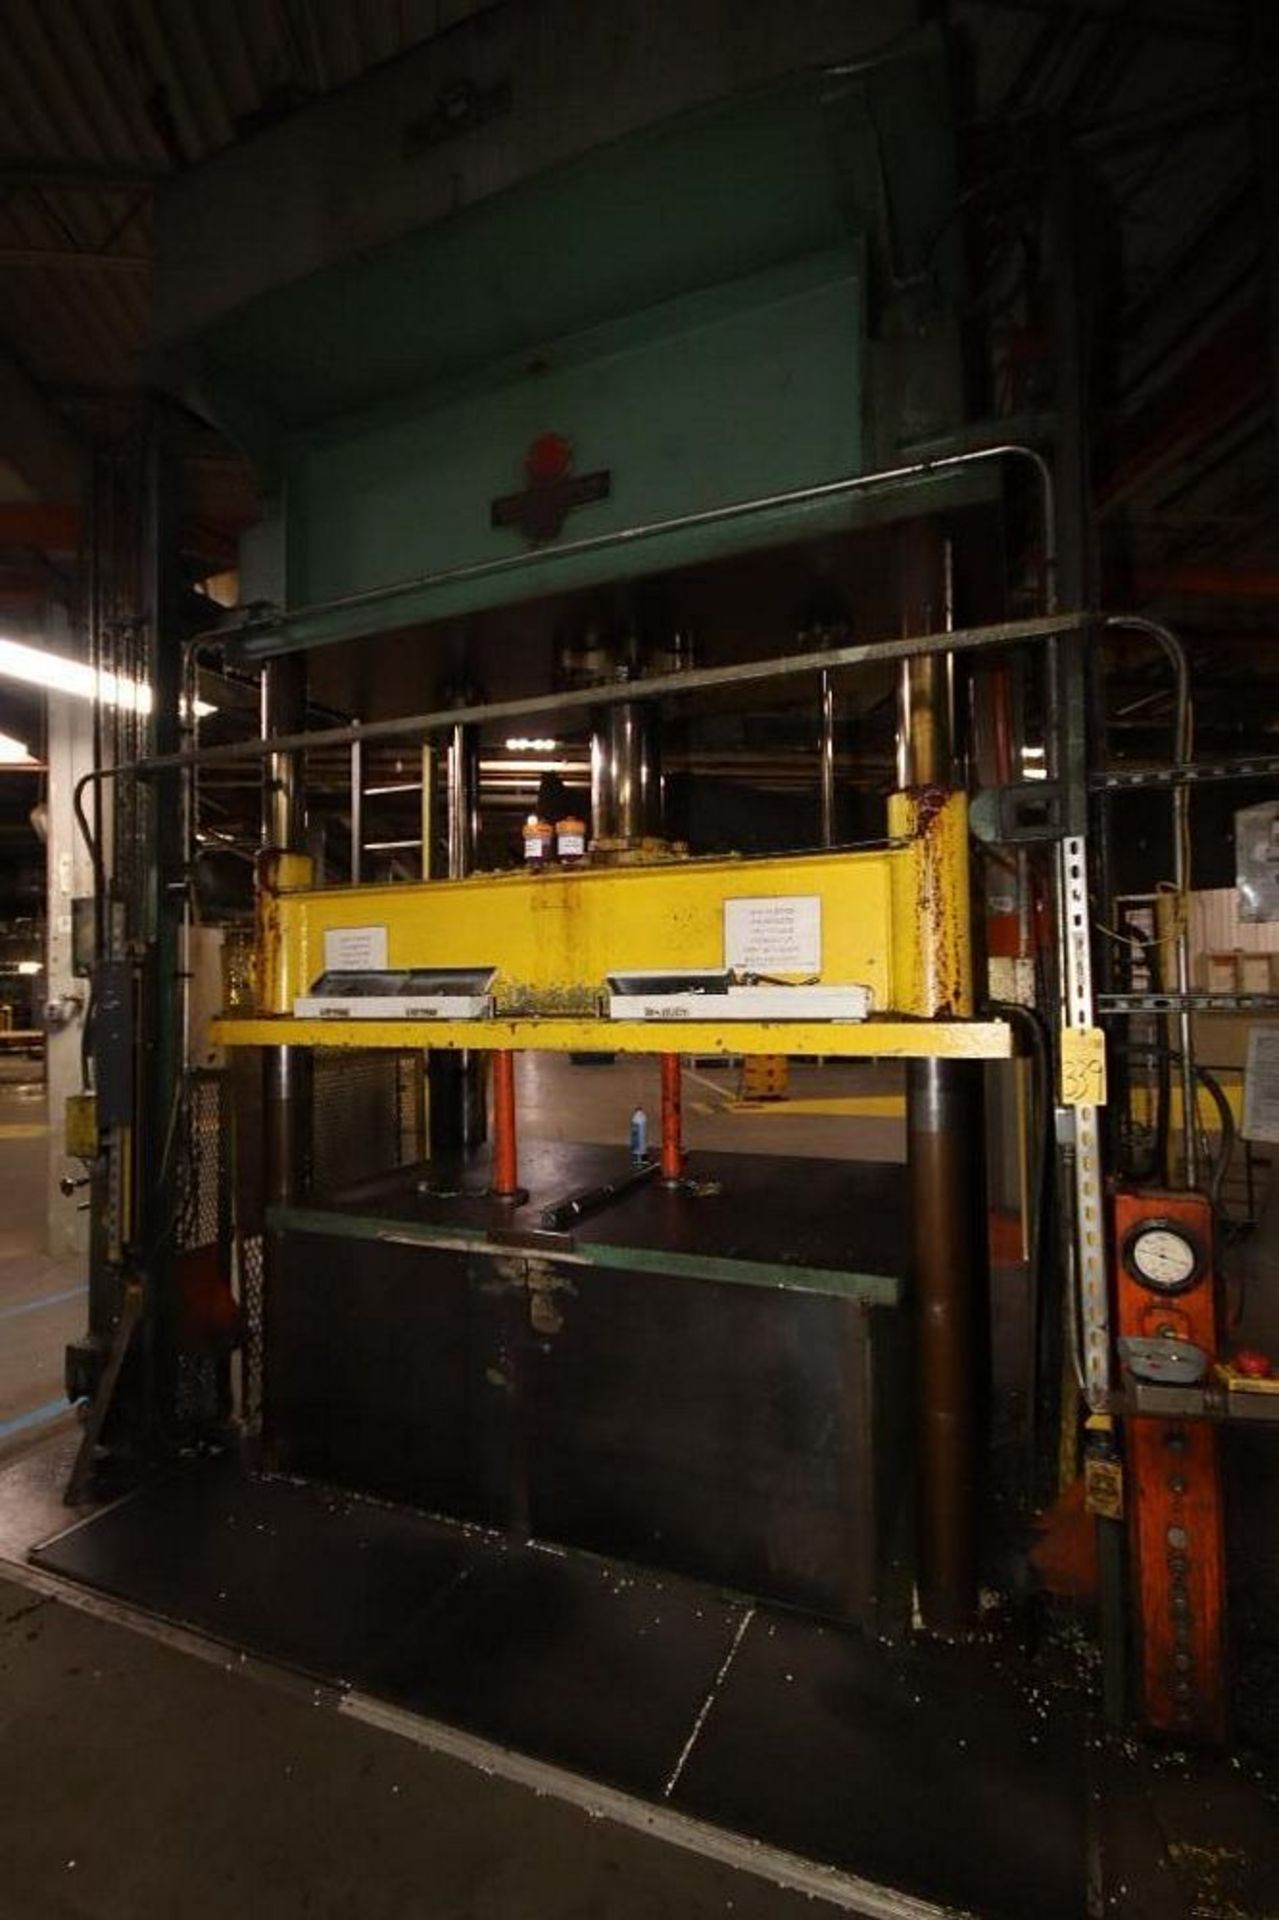 Rogers MD300-8456 Hydraulic Press, 100 Ton, 60" x 84" Bed, 65 PM *Subject to Bulk Bid - Image 2 of 2